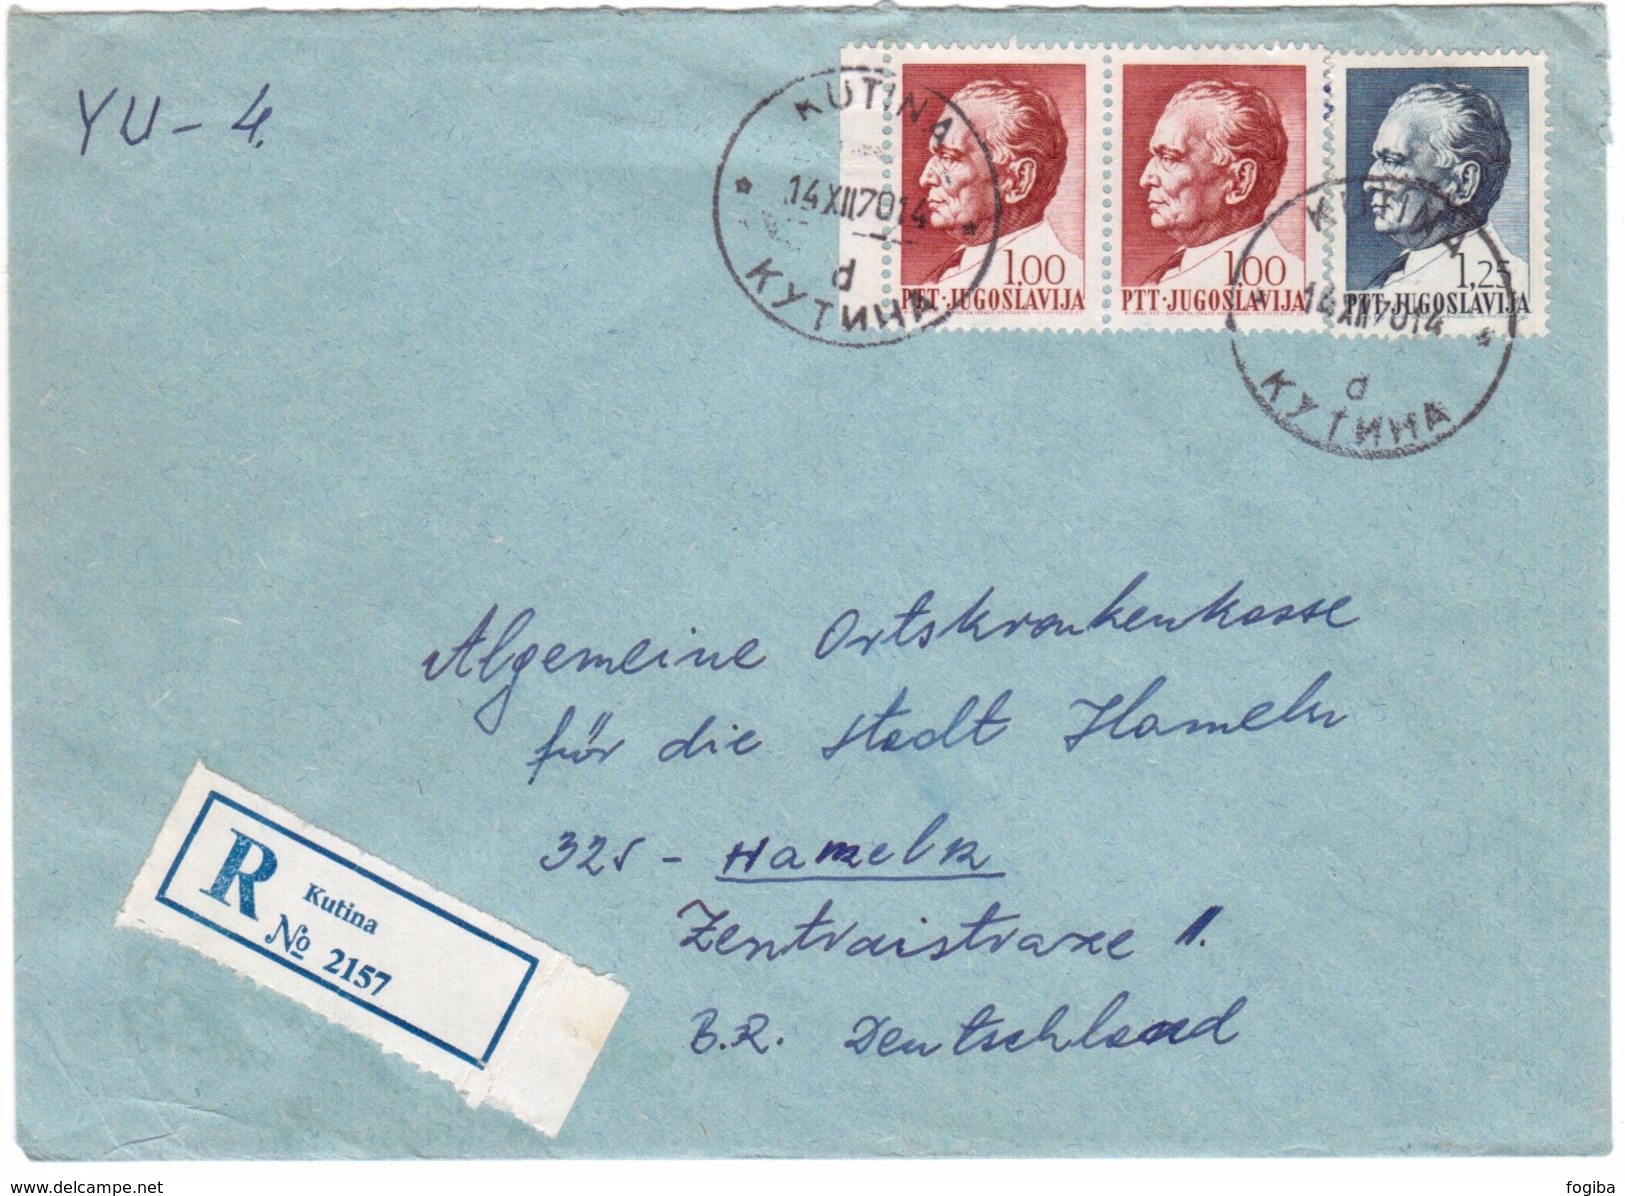 KN91    Yugoslavia 1970 Registered Envelope From Kutina To Hameln Germany - Storia Postale